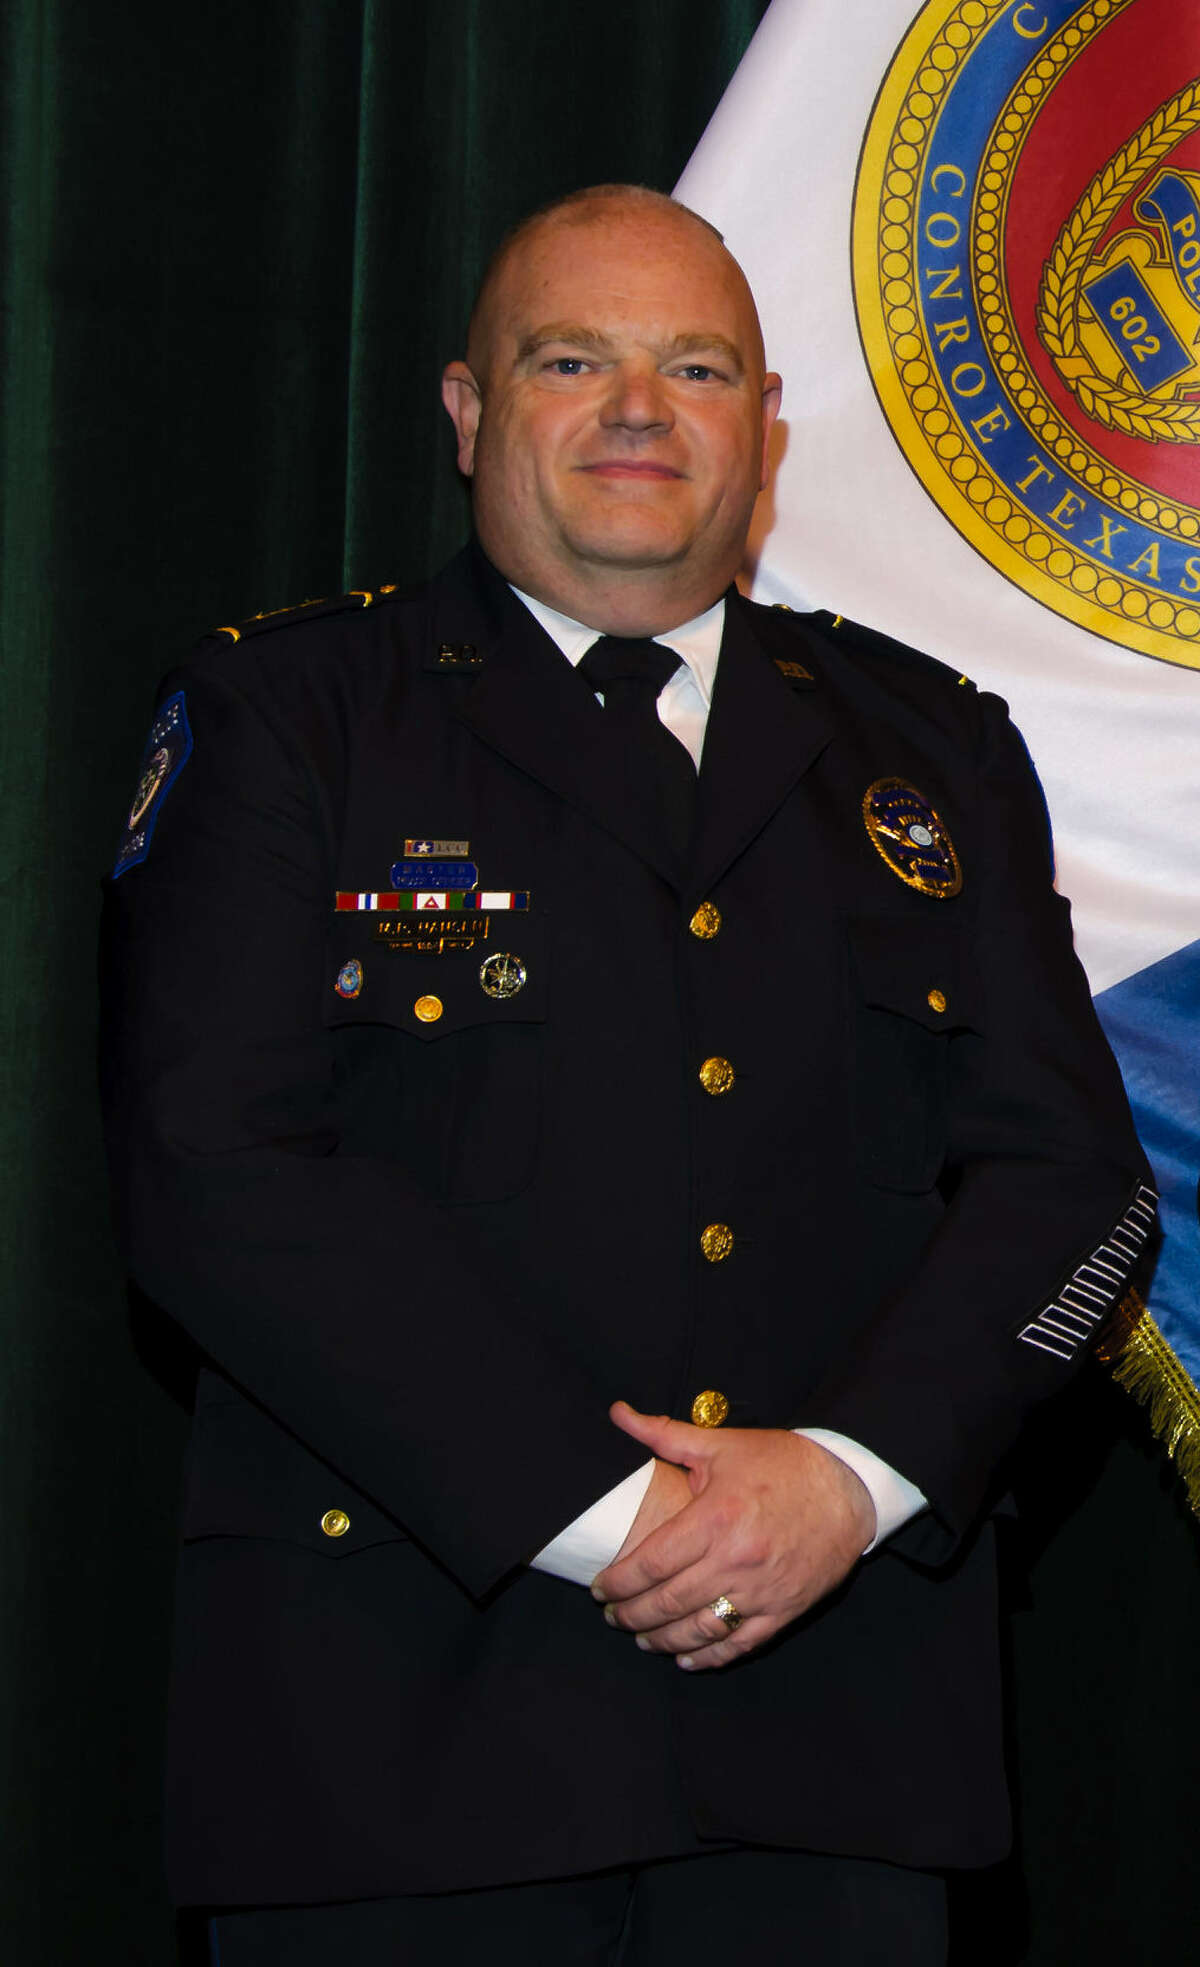 Michael R. Hansen, a Conroe deputy chief, has 35 years of experience.